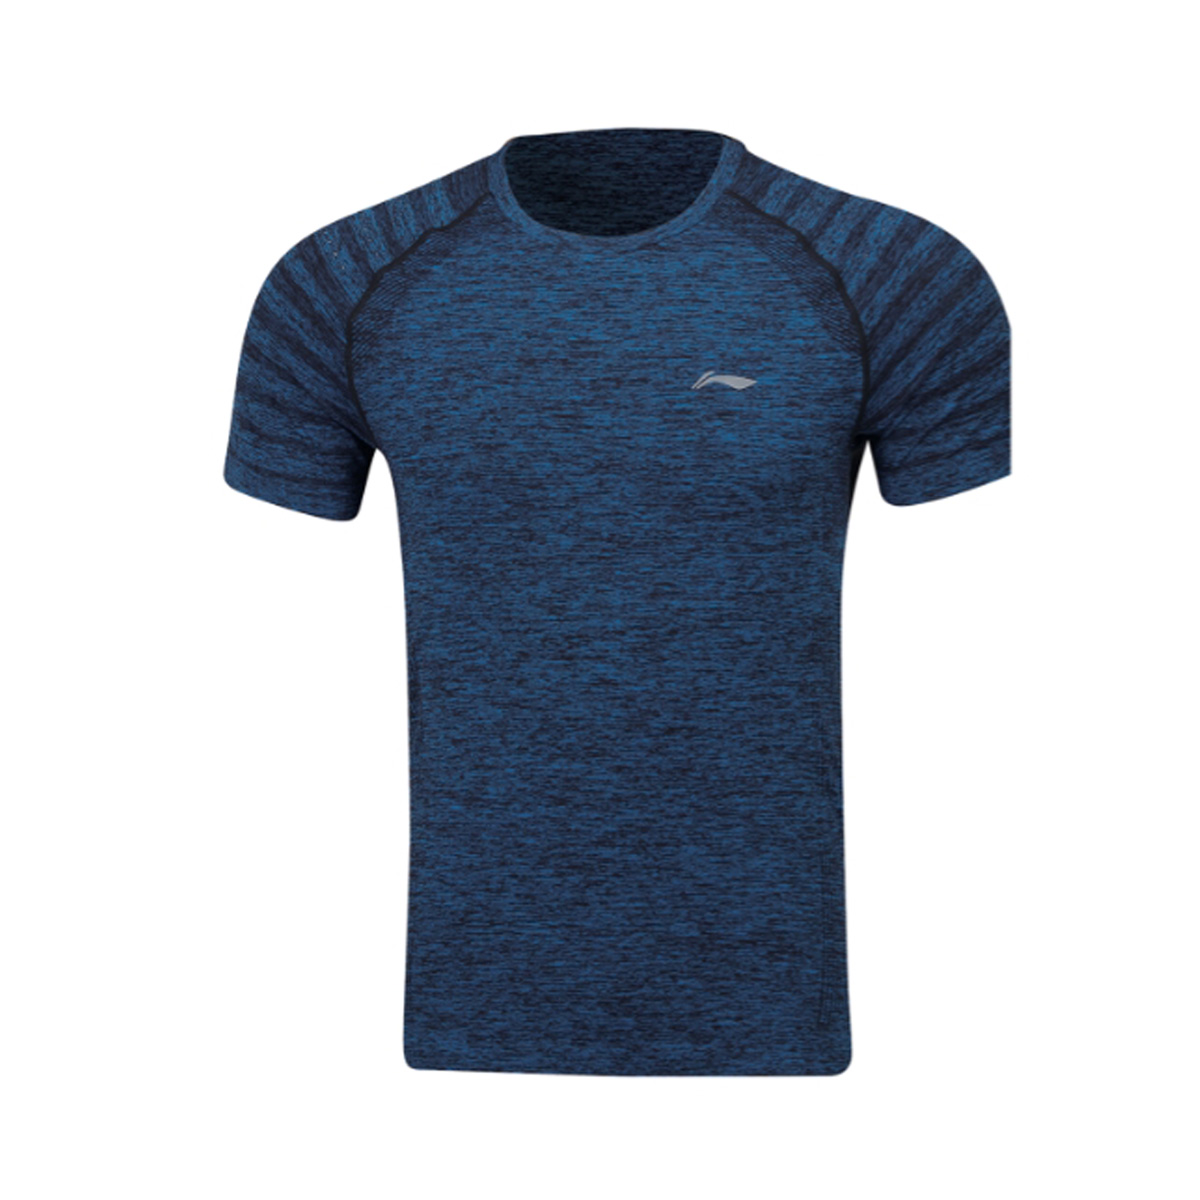 Мужская футболка LI-NING ATSP145 BLUE (размеры: L). 